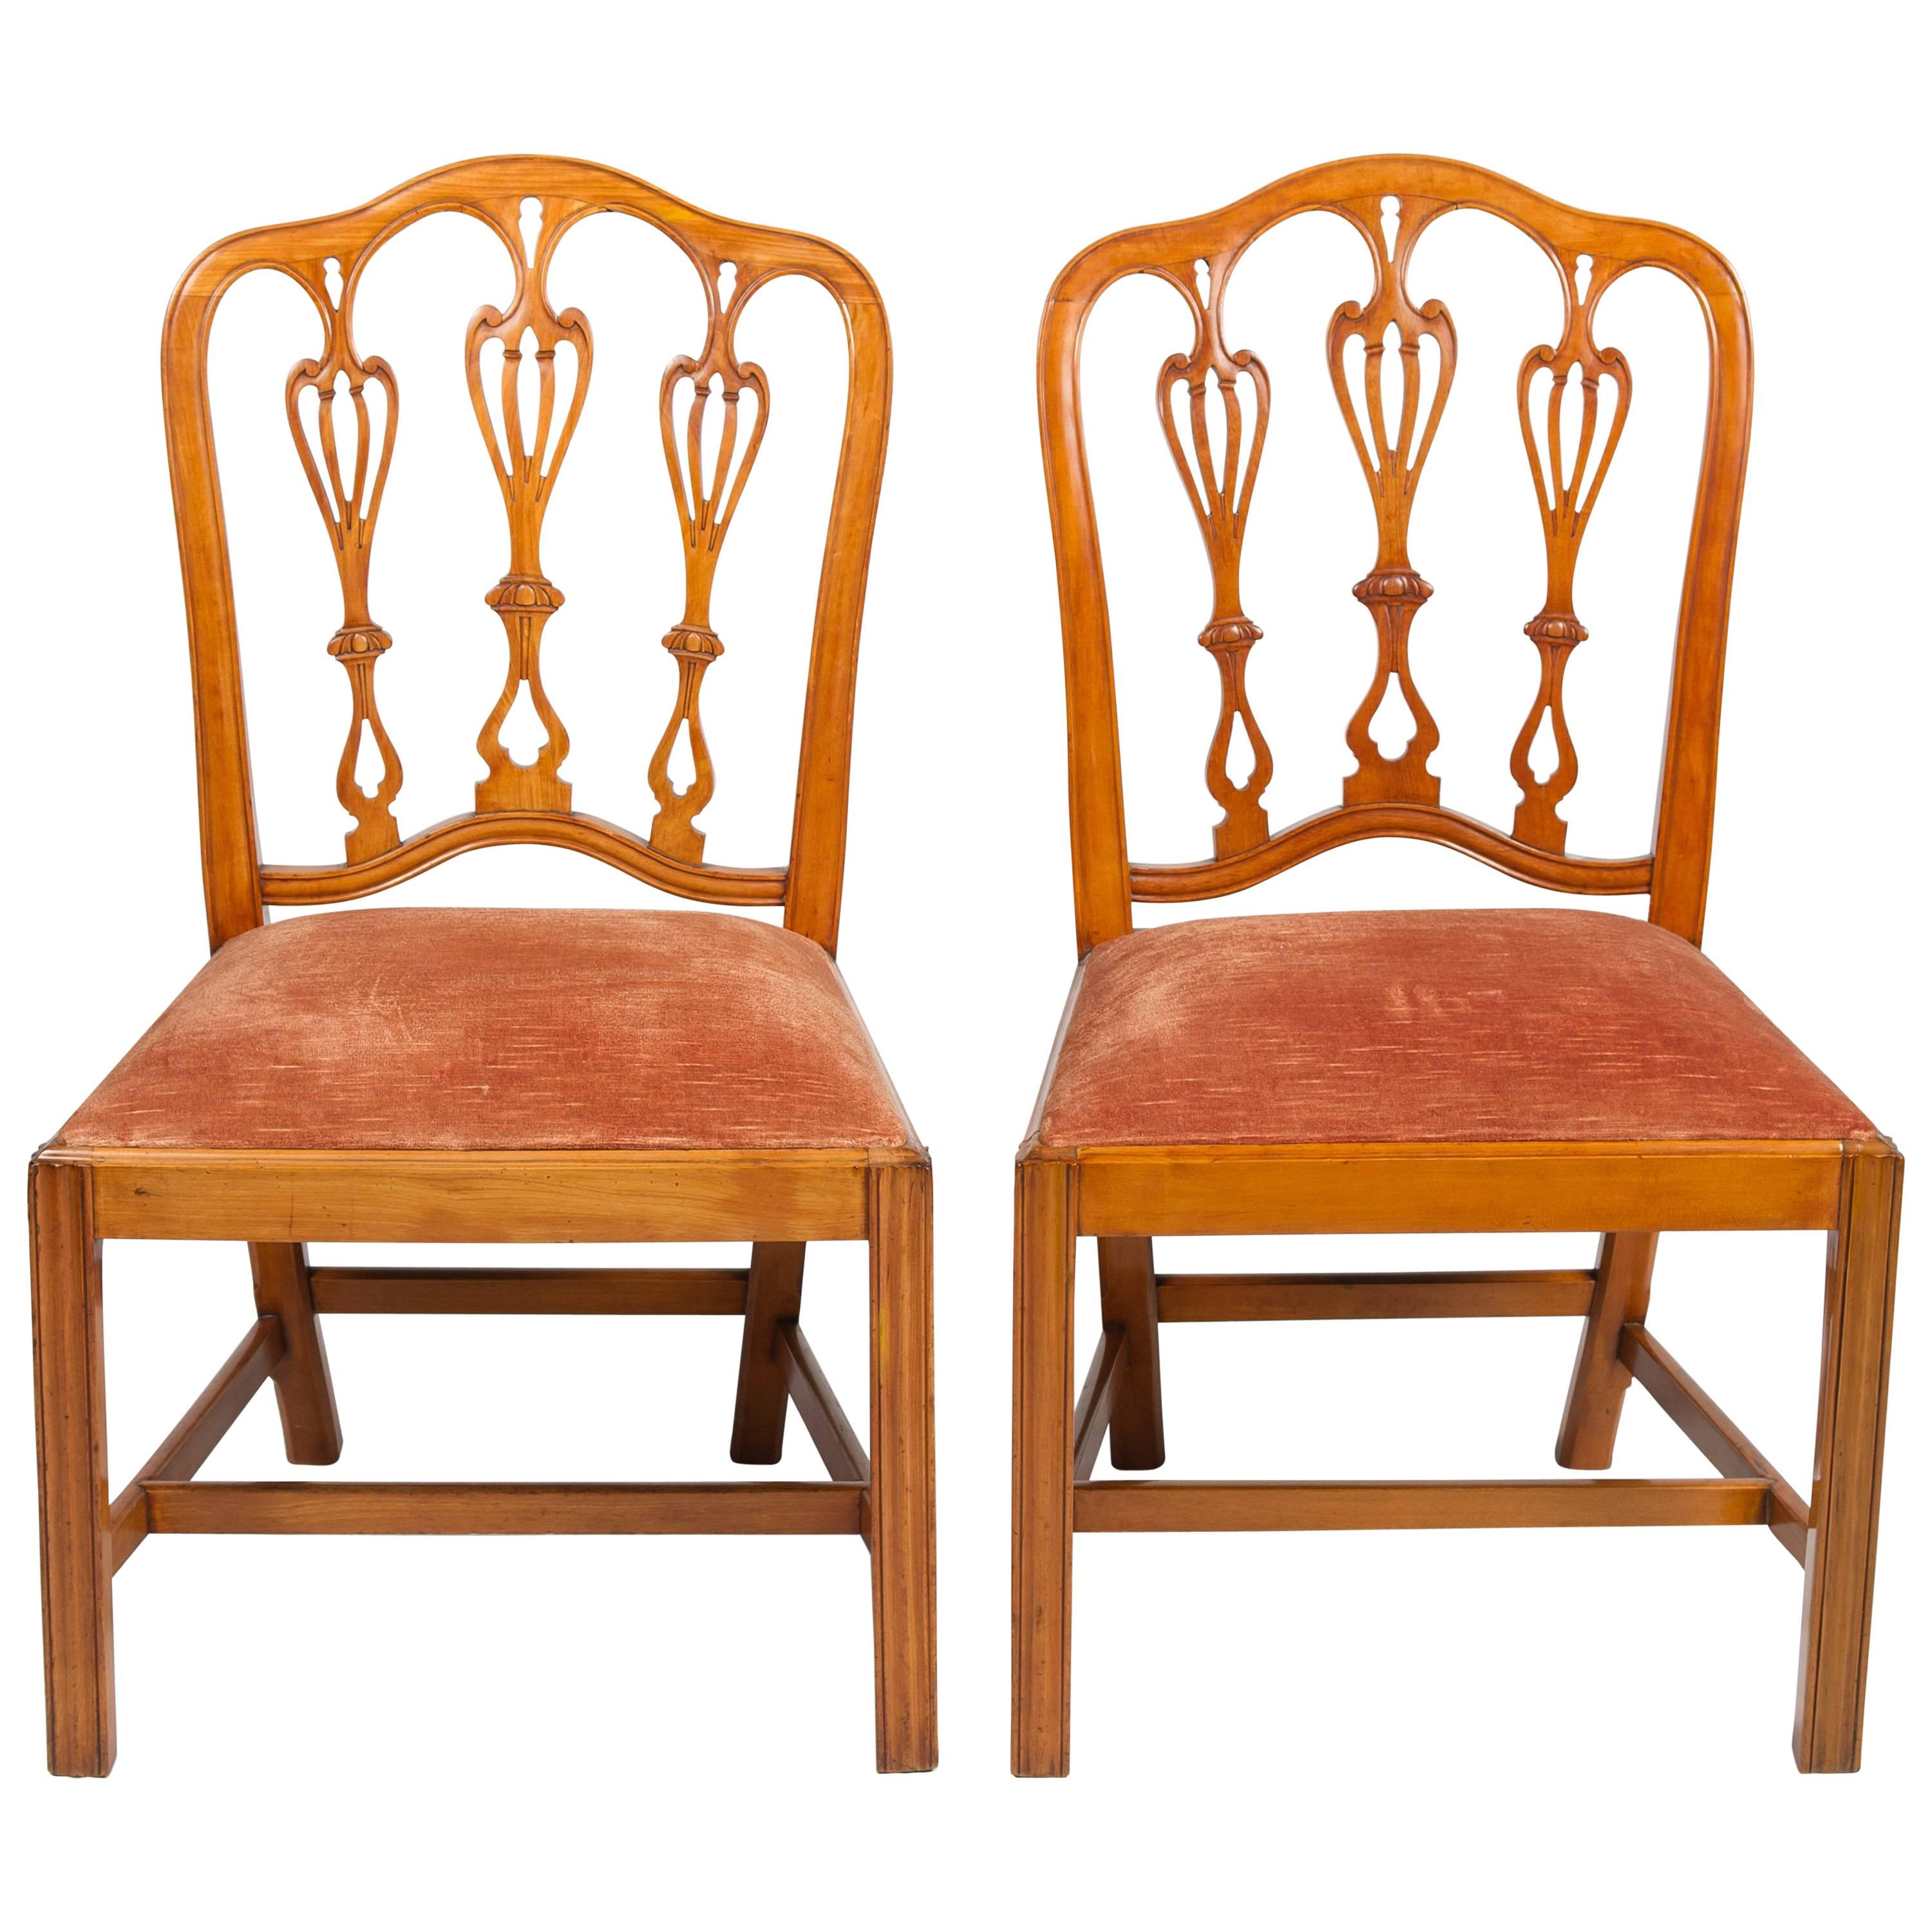 Rare Pair of George II Period Satinwood Chairs